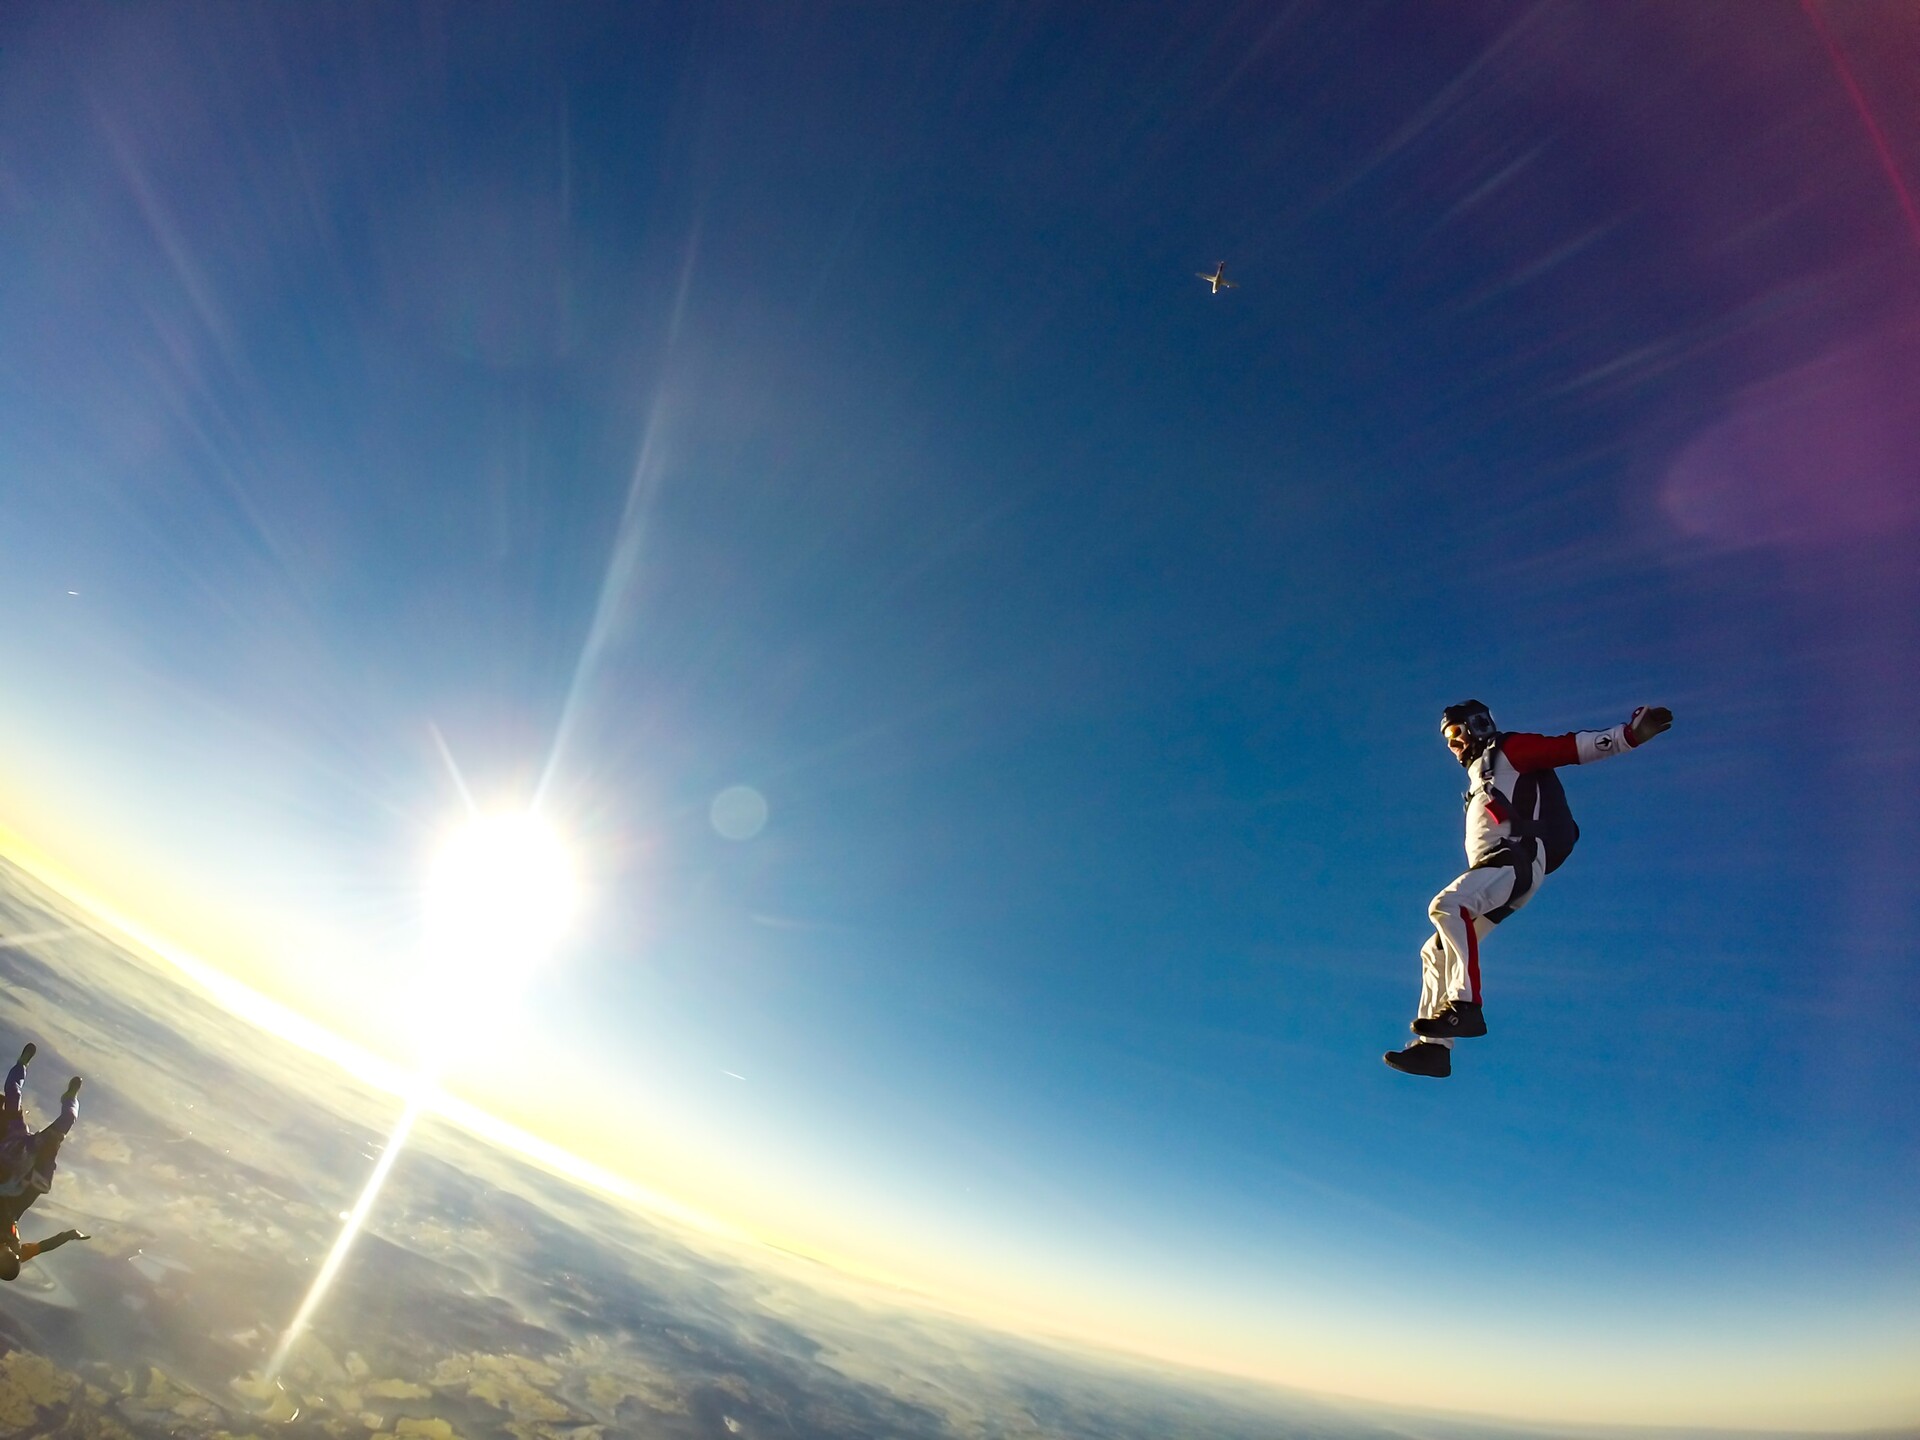 A person freefalling through the air